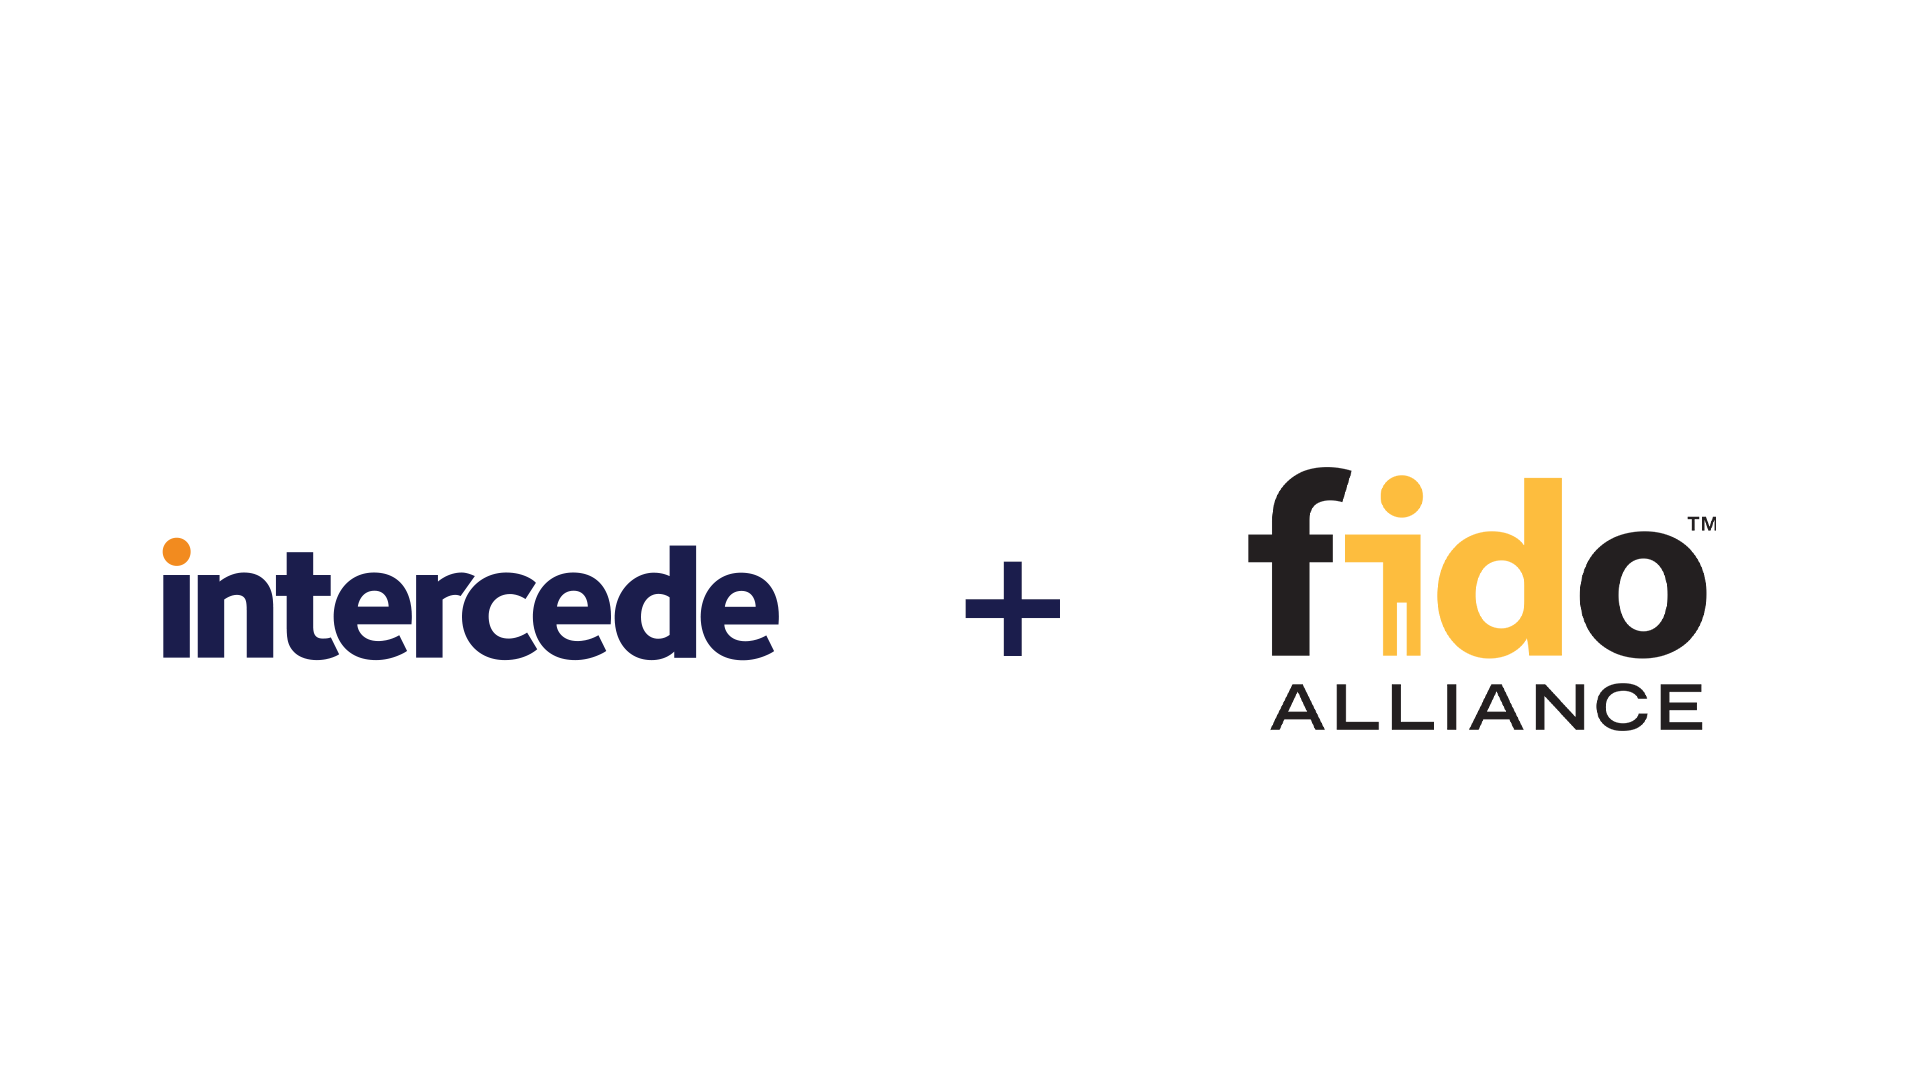 Intercede join the FIDO Alliance